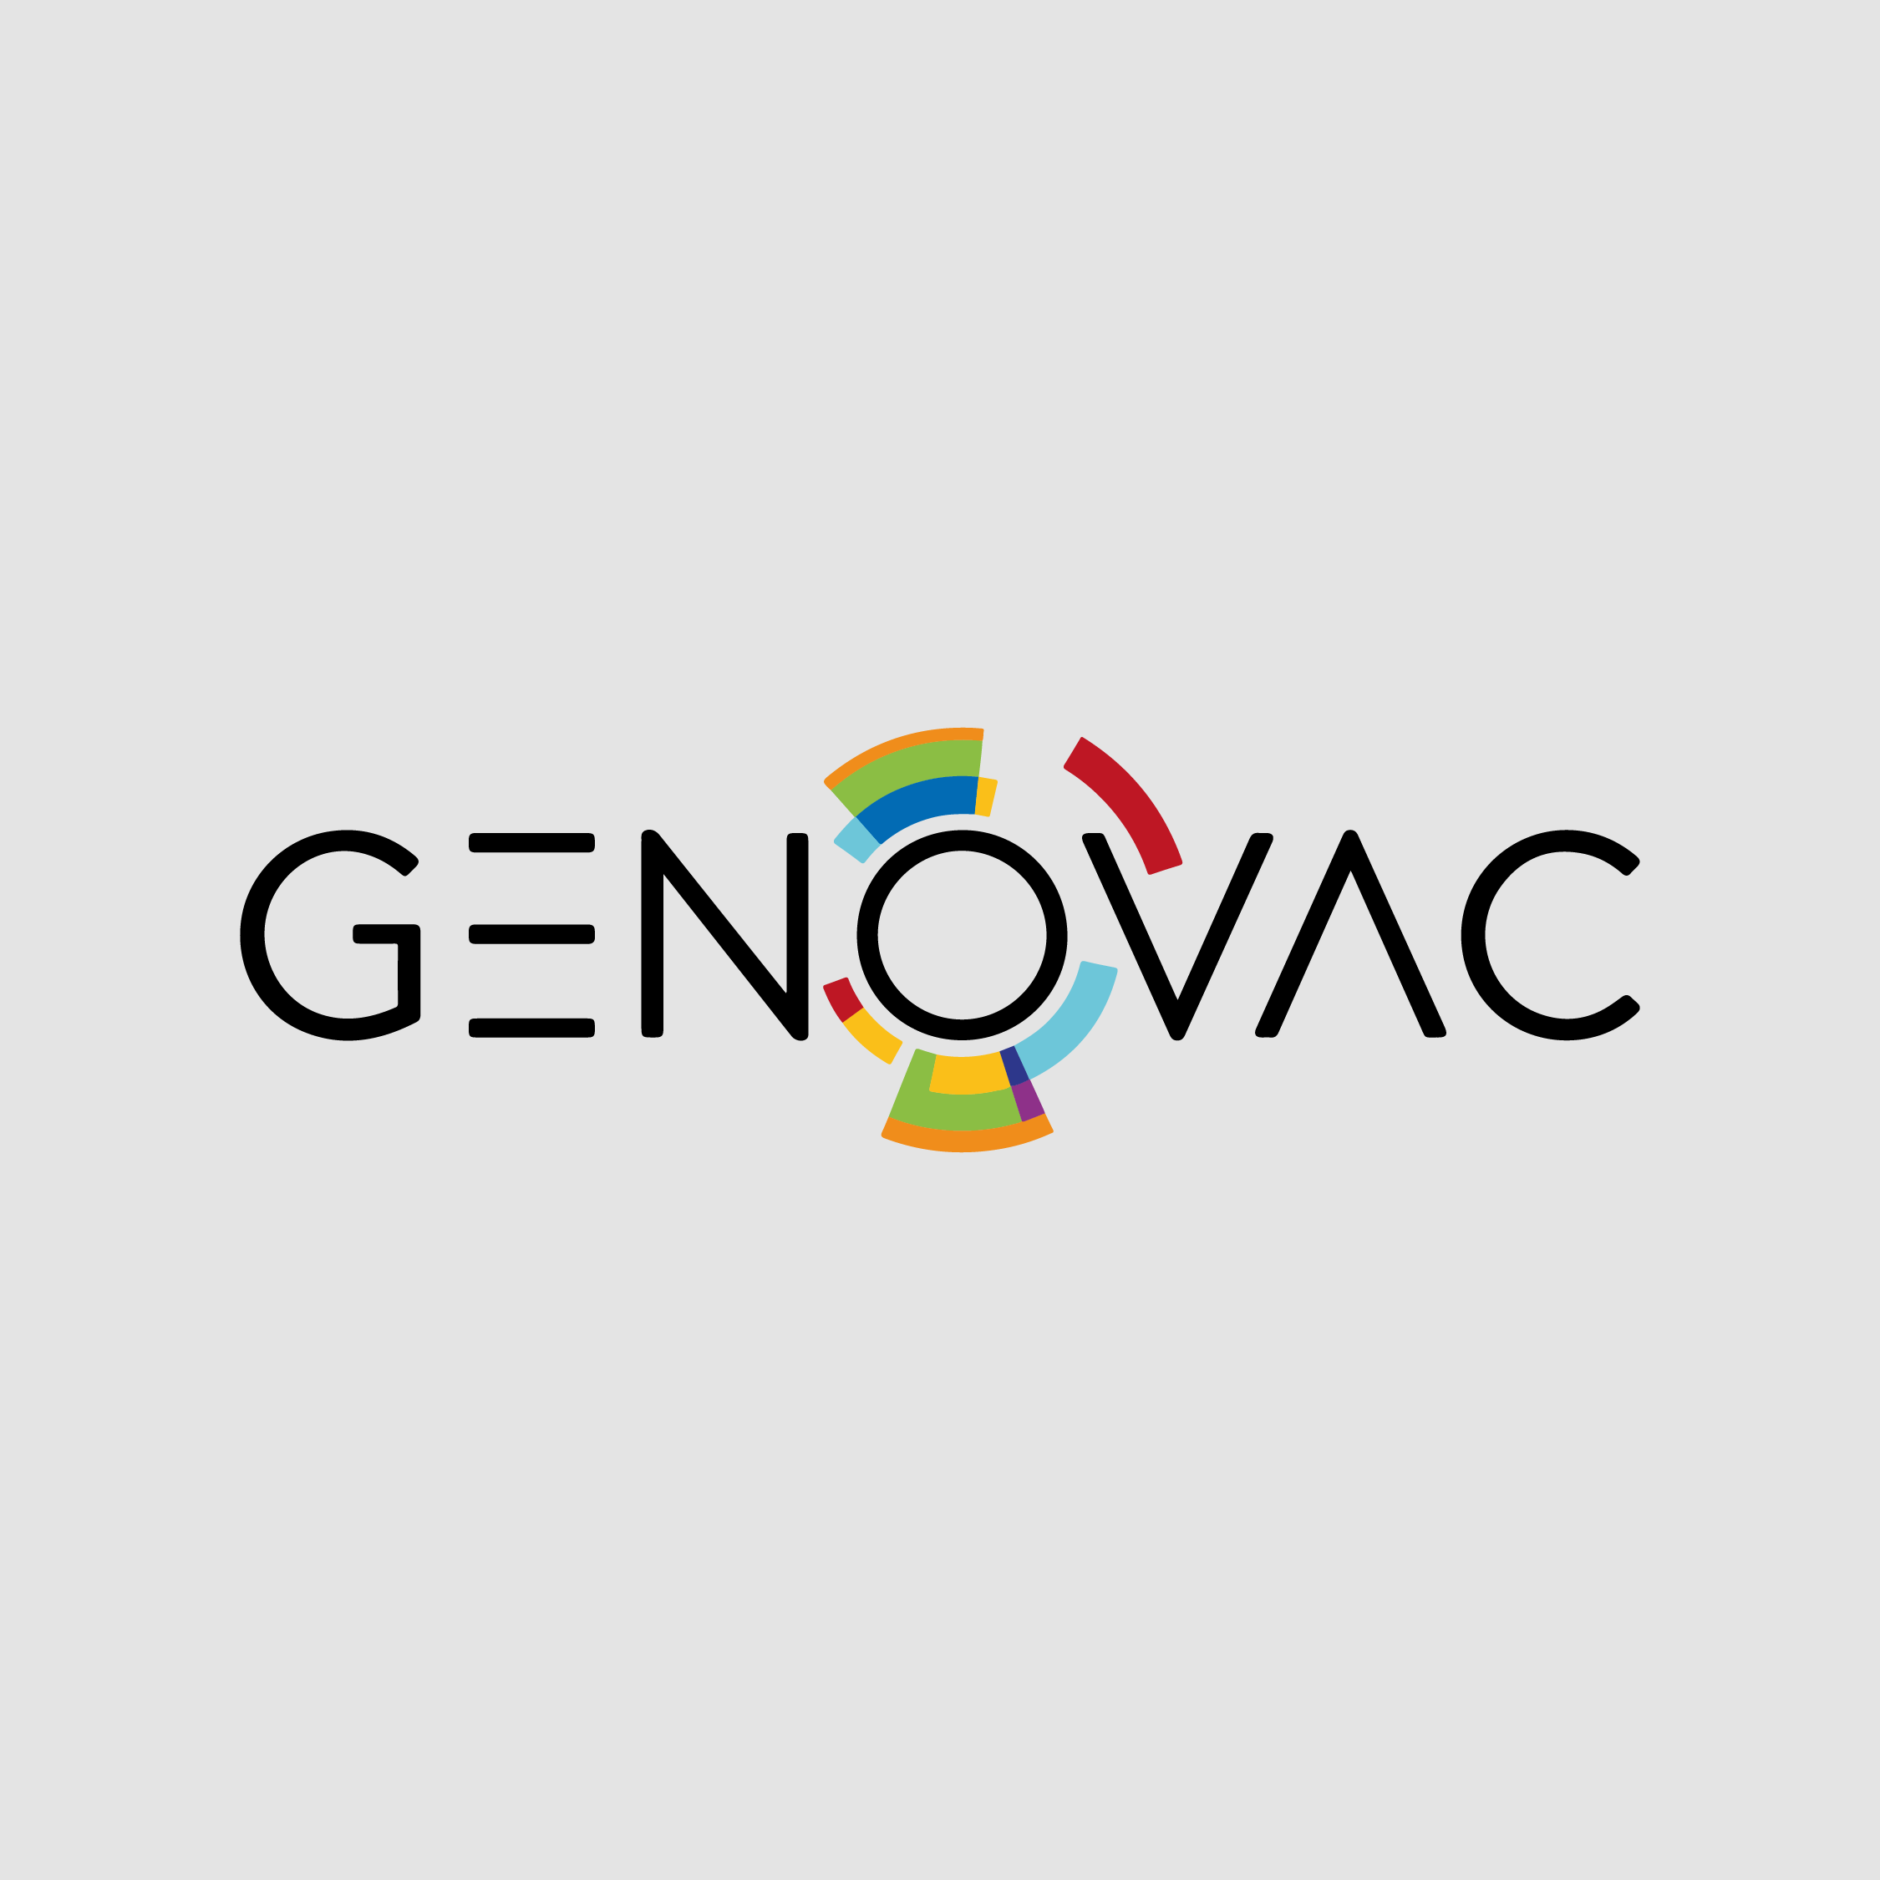 Genovac logo